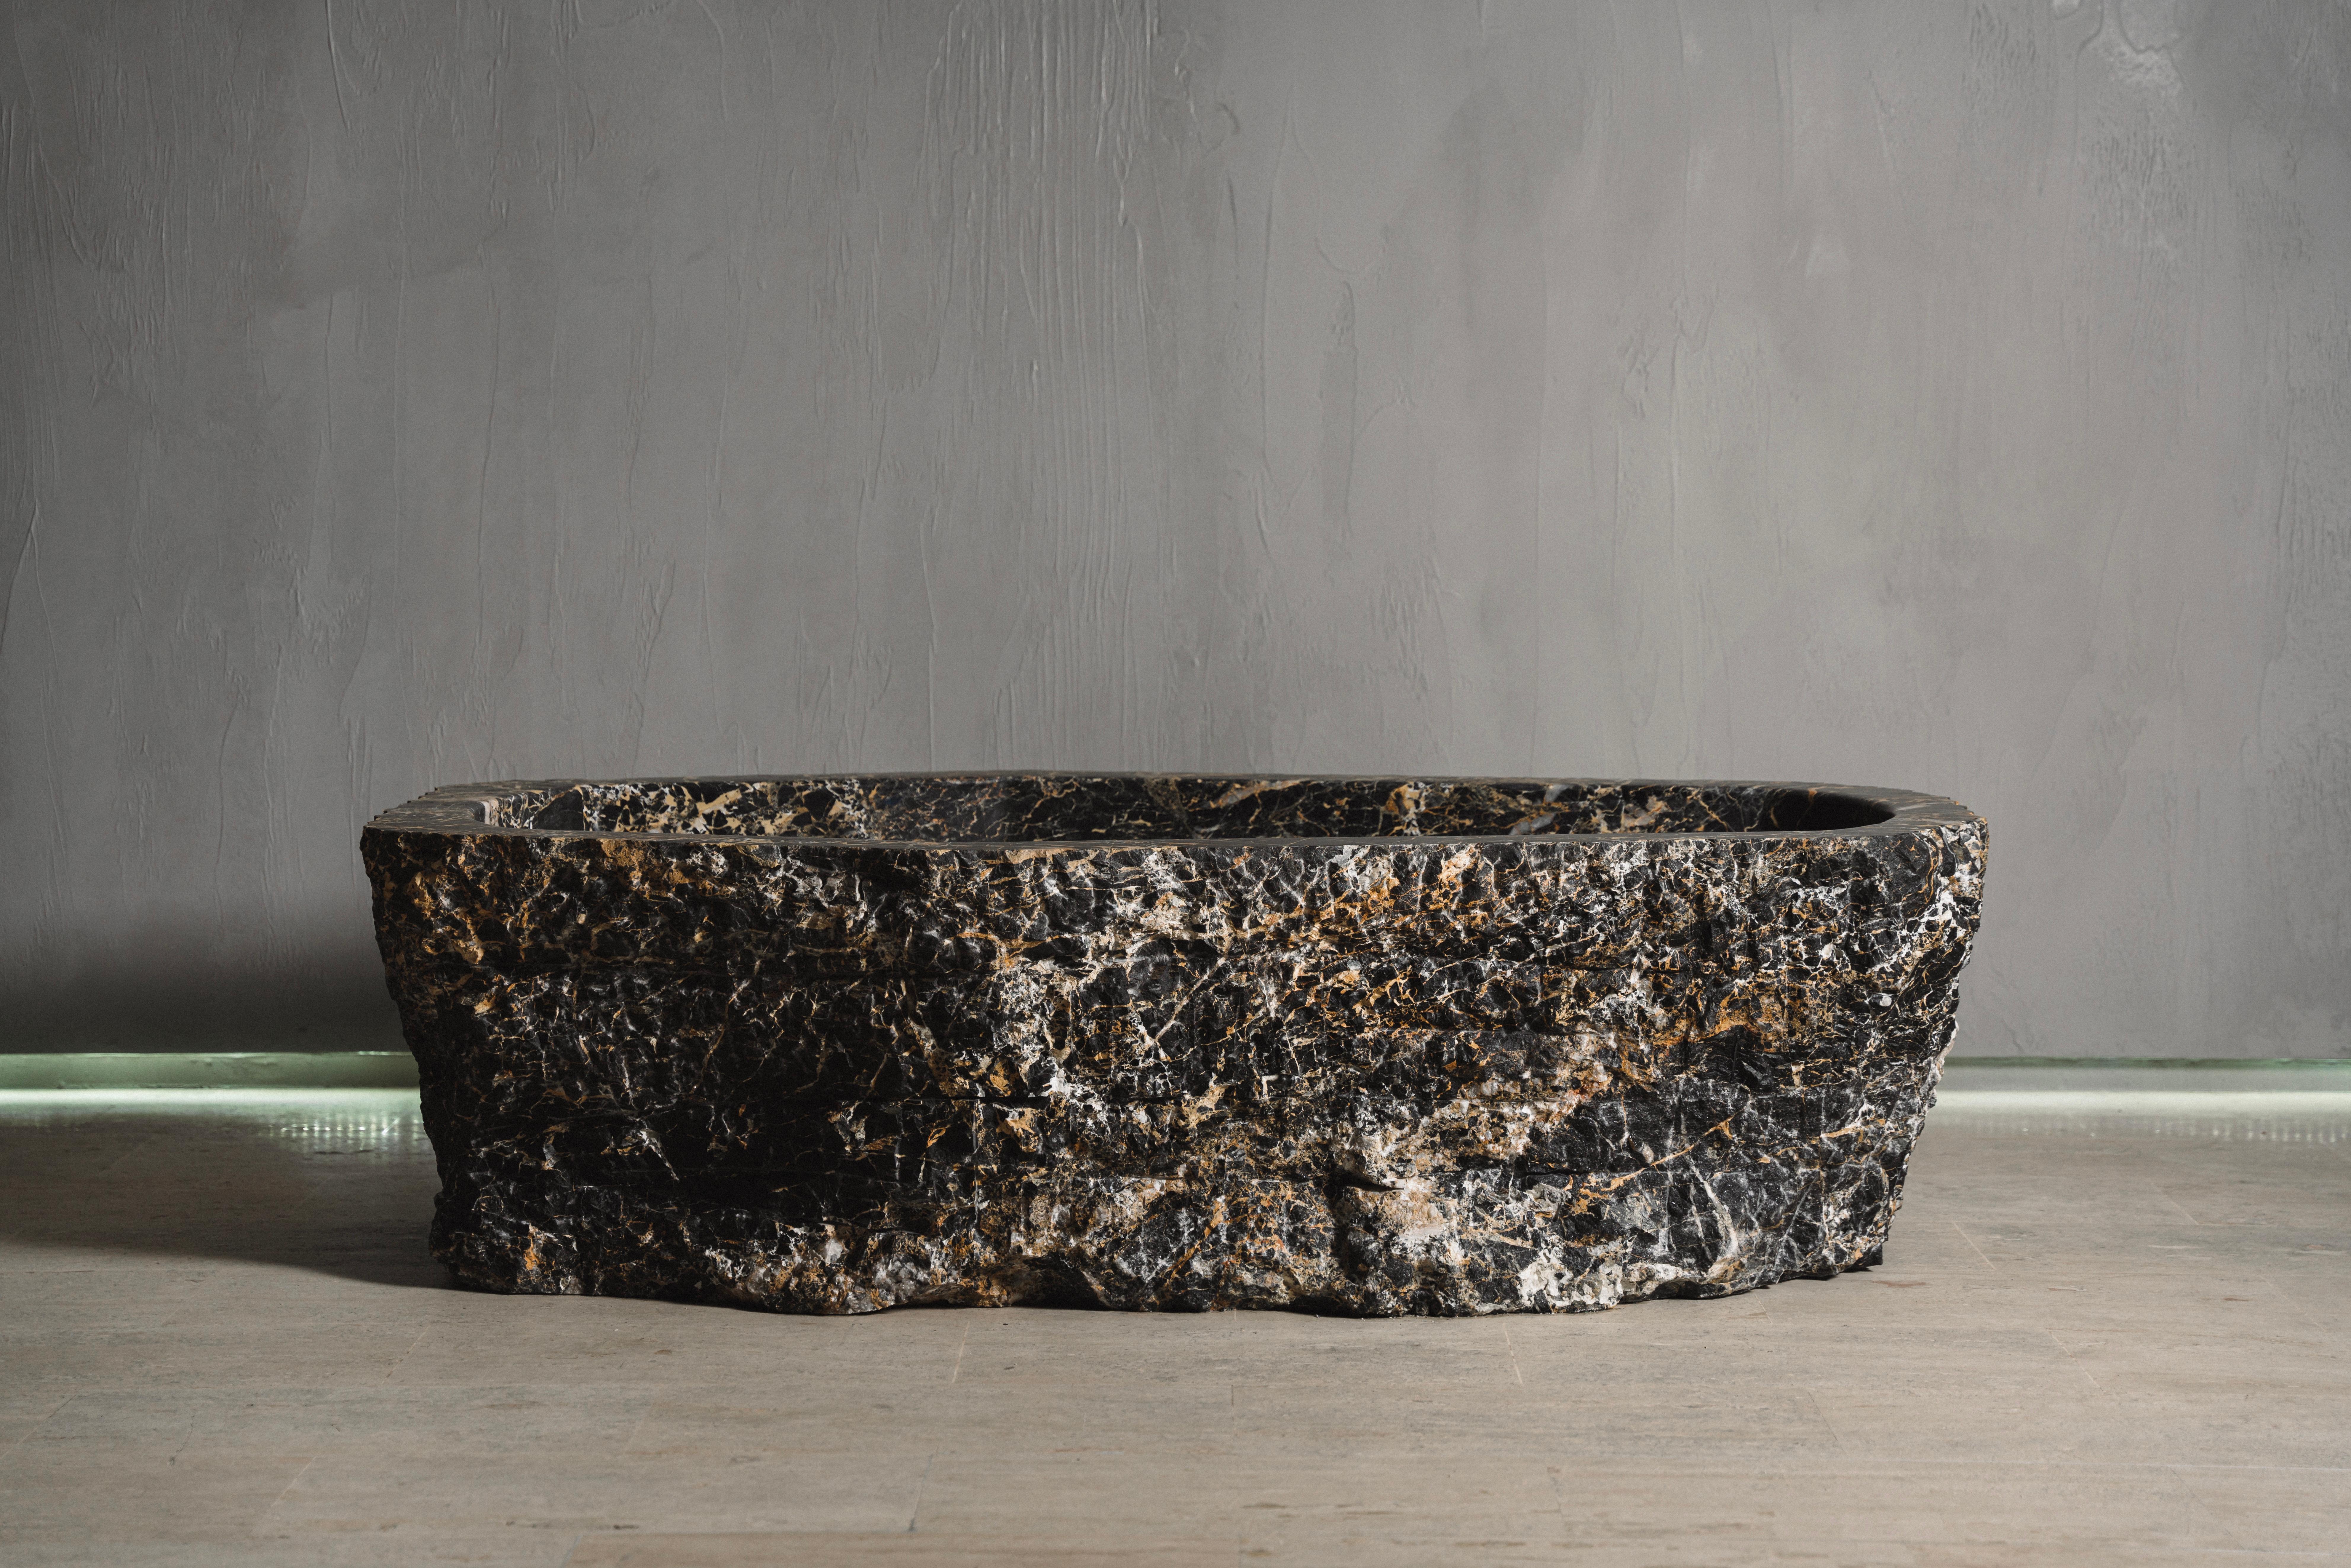 Baptiz rock bath tub by Andres Monnier
One of a Kind.
Dimensions : L 190 x W 110 x H 50 cm
Dimensions Available: L 170-200 x W 80-110 x H 45-55 cm.
Materials: Portoro Black Marble.
Stone Options Available: Grey, Black and White Marble, Natural